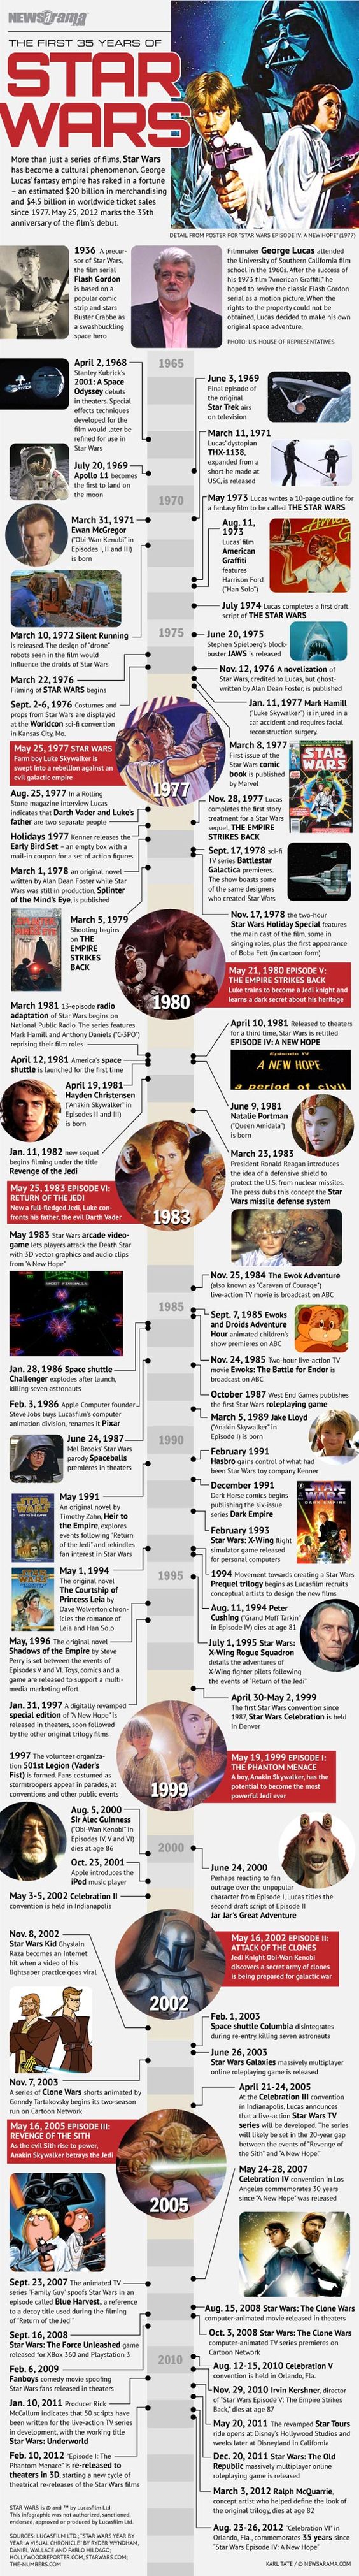 35 years of Star Wars